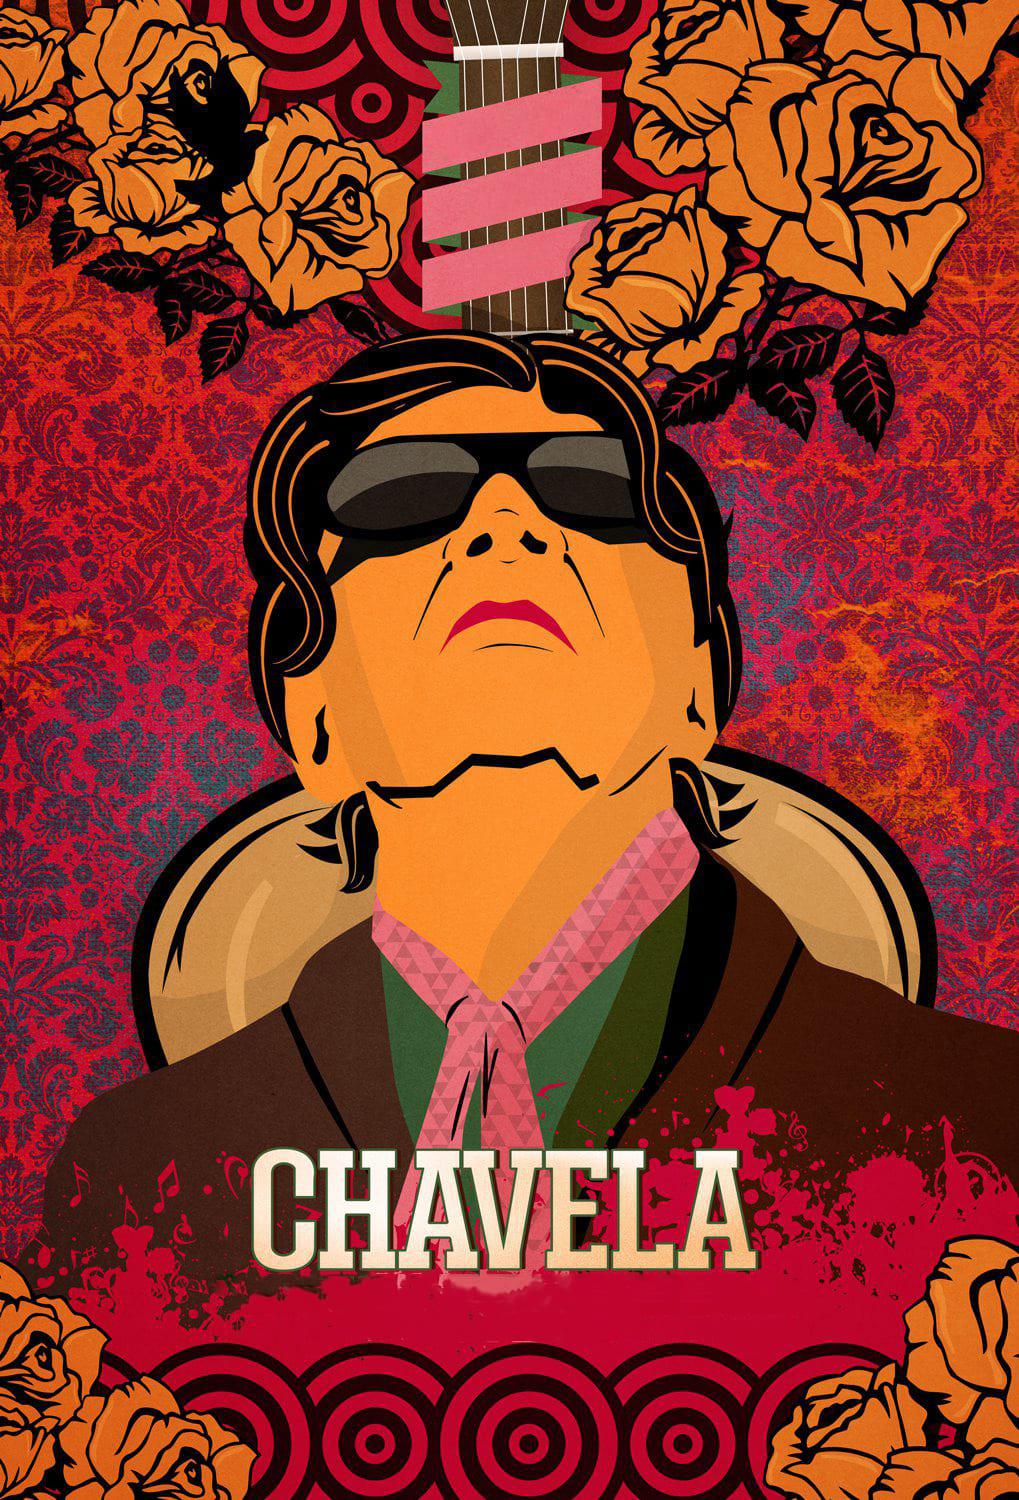 Chavela poster